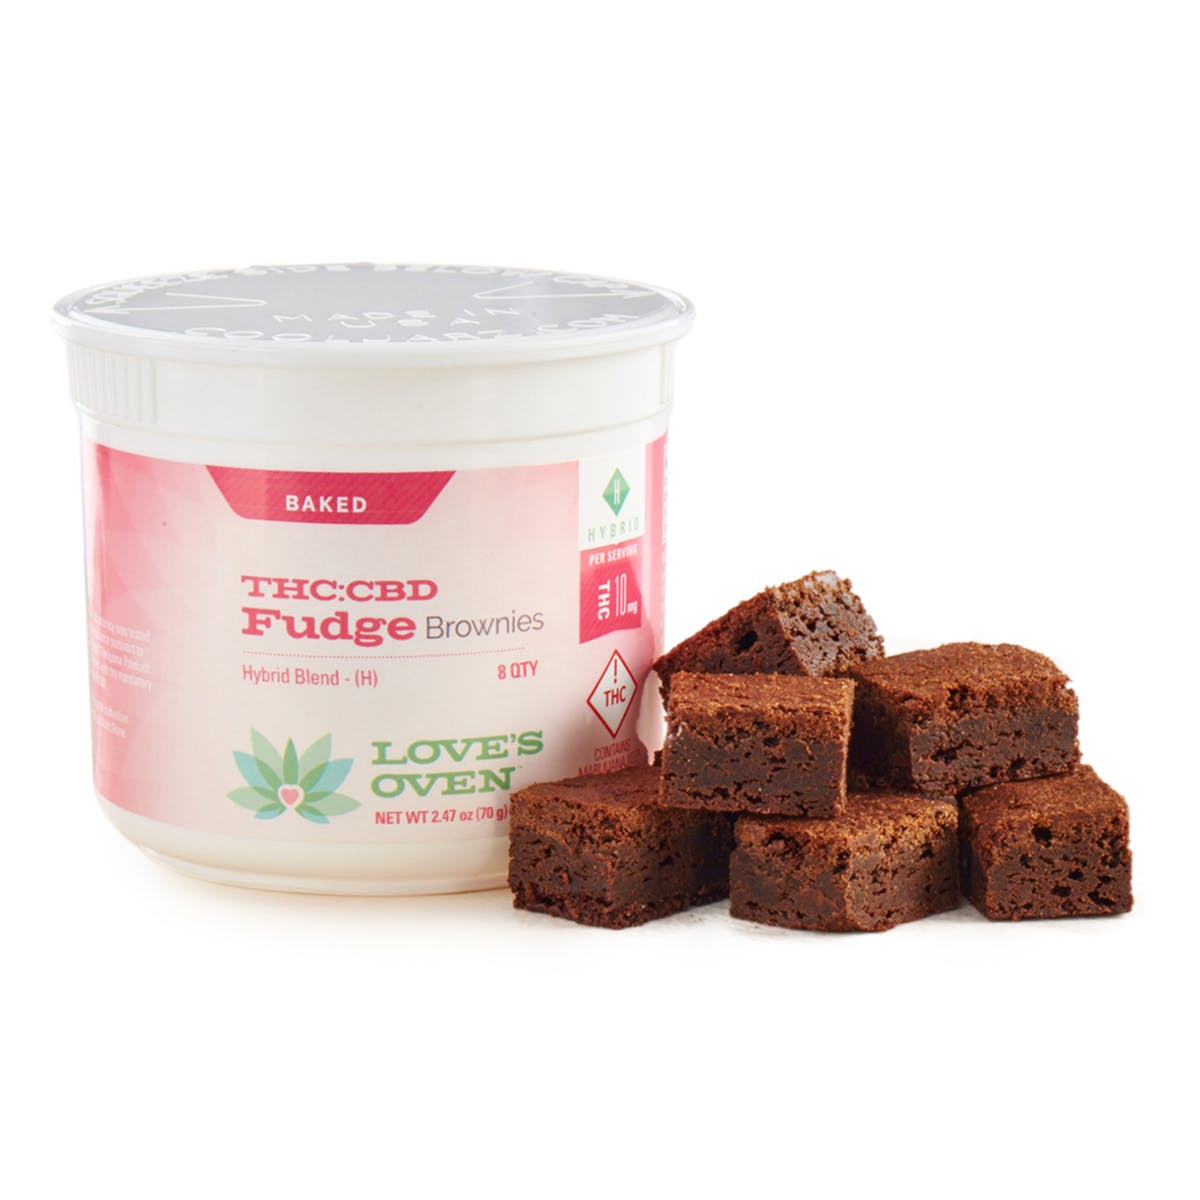 Recreational THC:CBD Fudge Brownies, 80mg